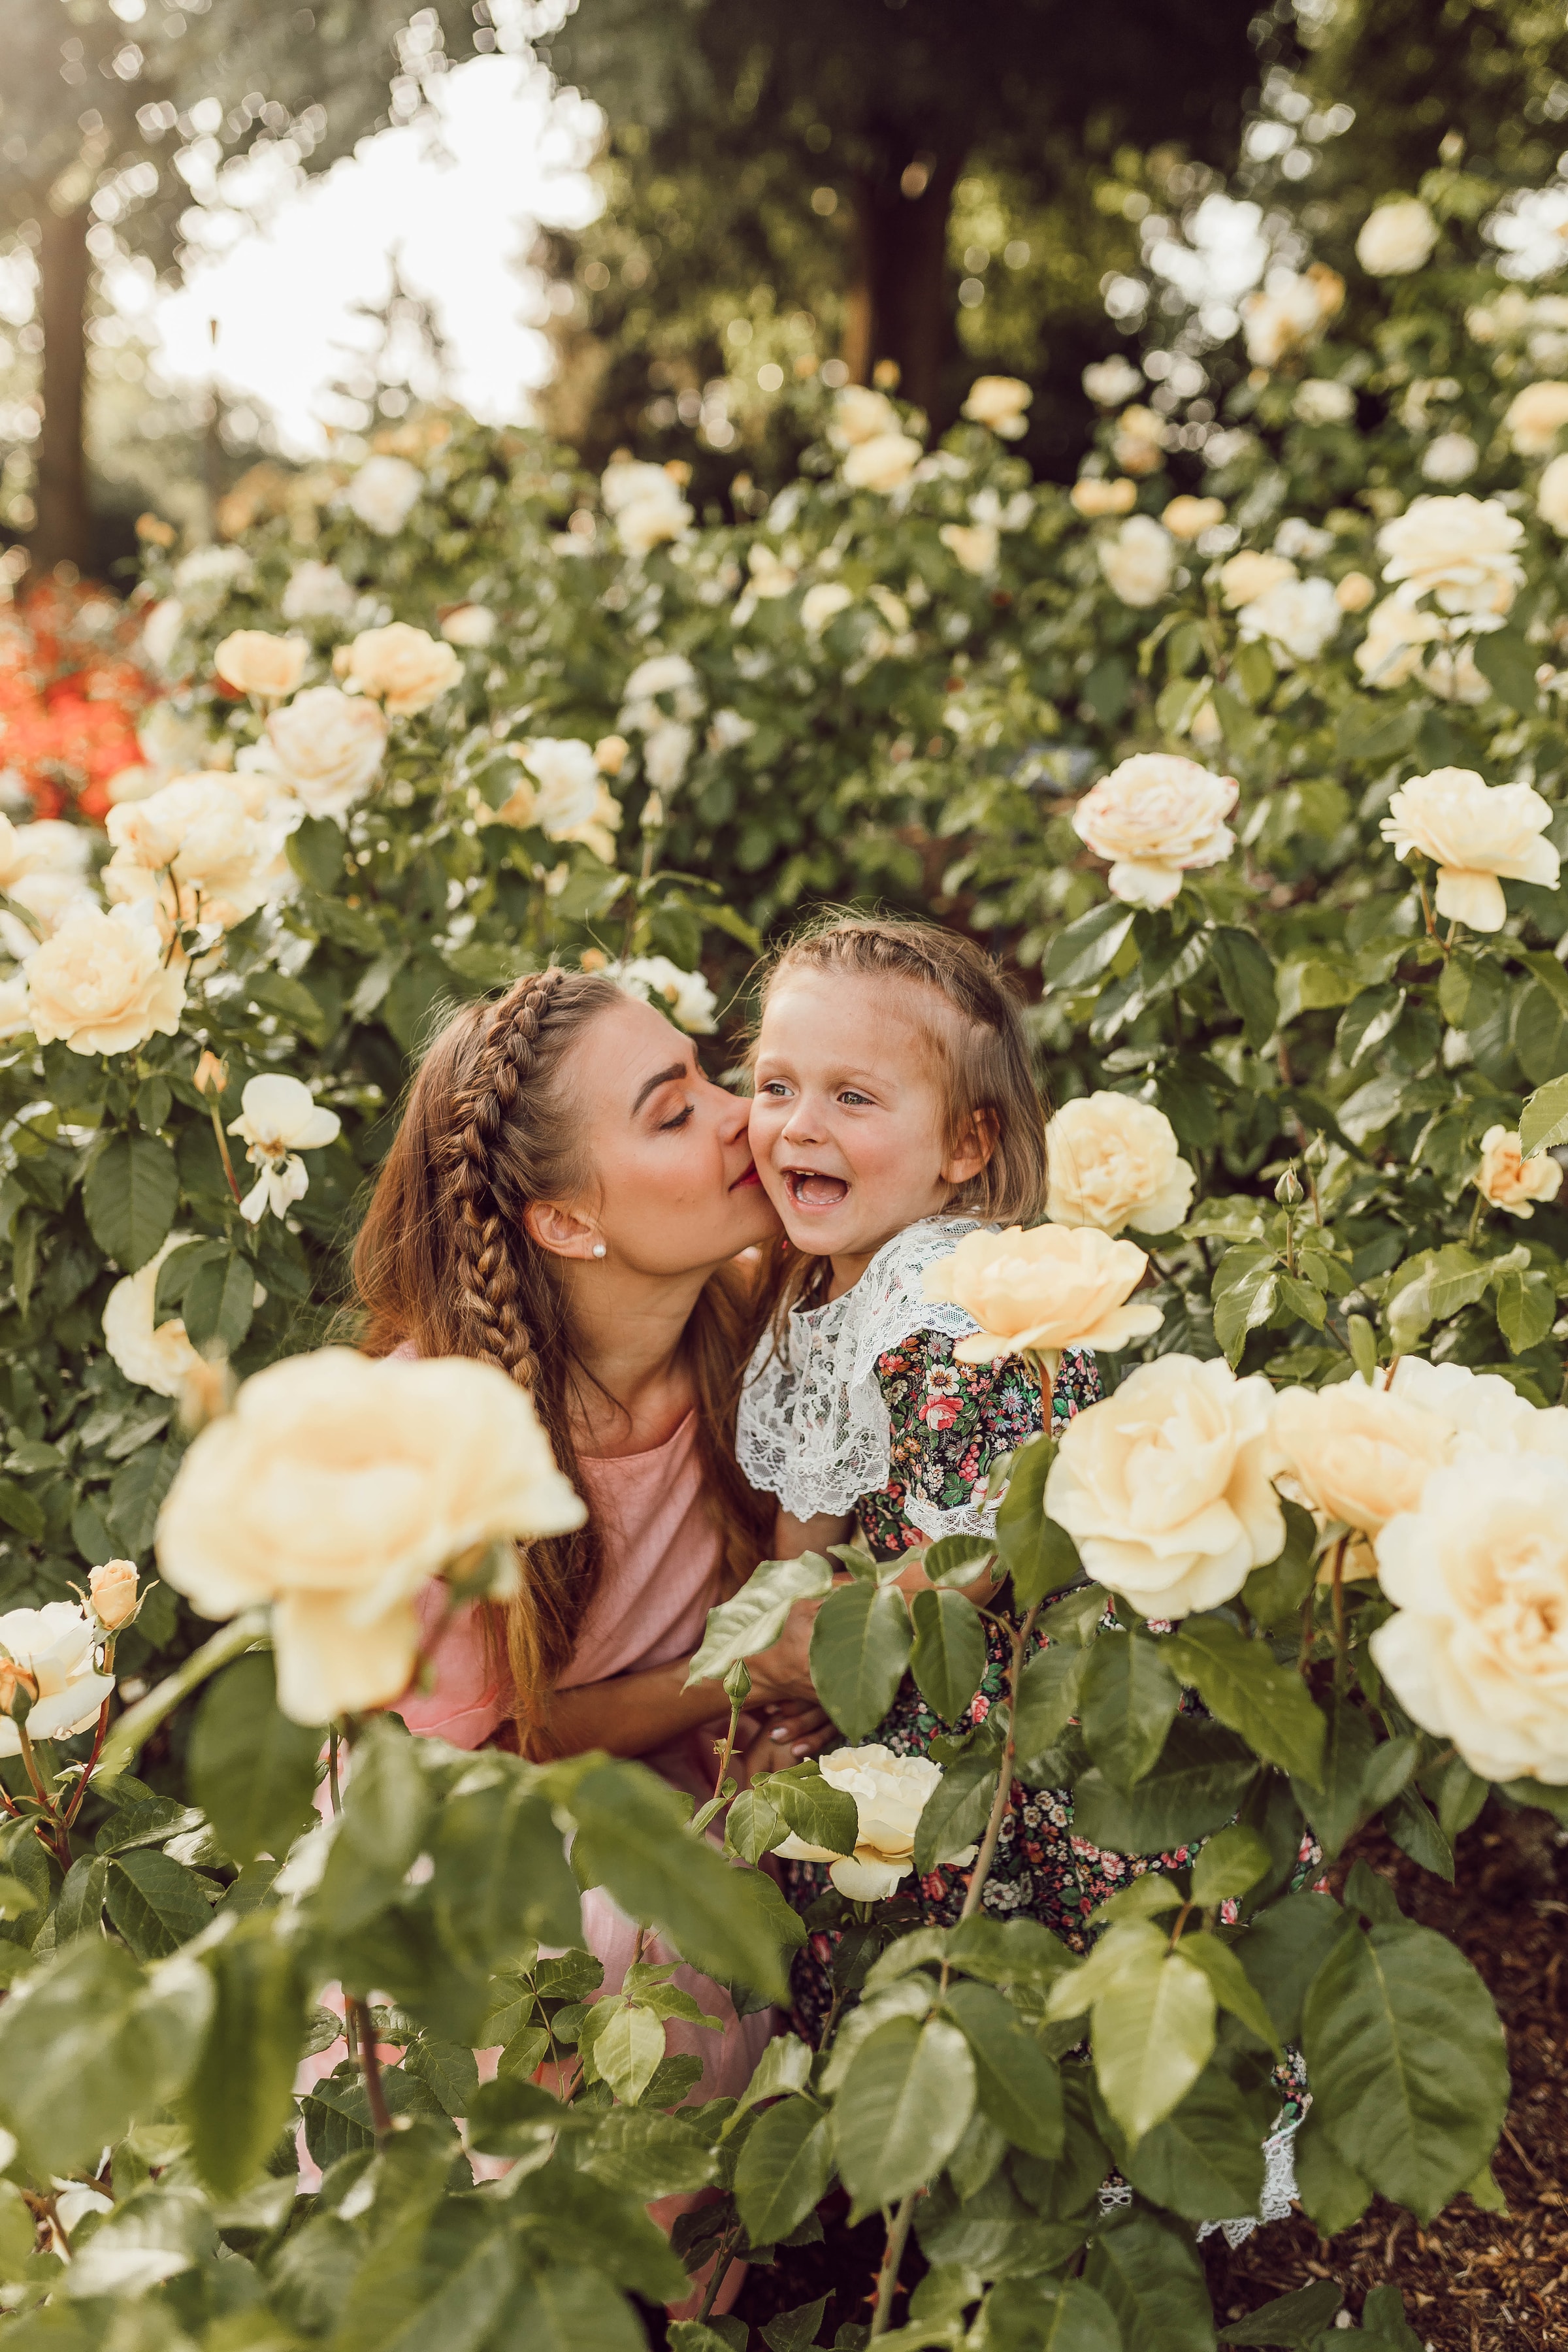 An affectionate mom kissing her little girl in a garden | Source: Shutterstock